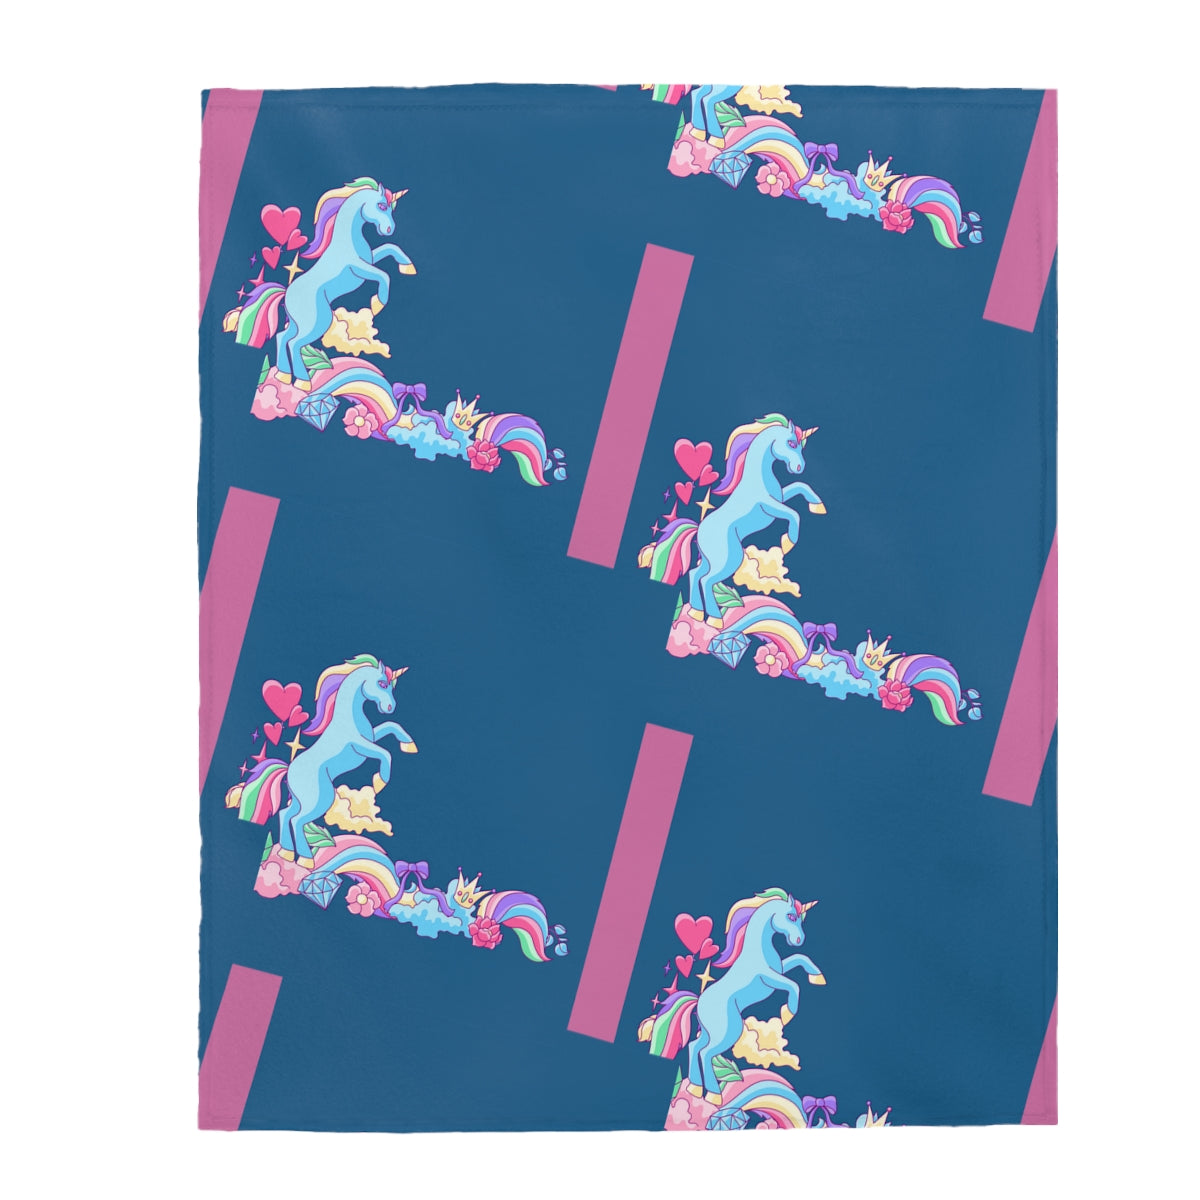 Kids Blankets Personalised, Unicorn Theme Throw Blanket, Plush Super Soft Cozy Throw Blankets 3 Sizes